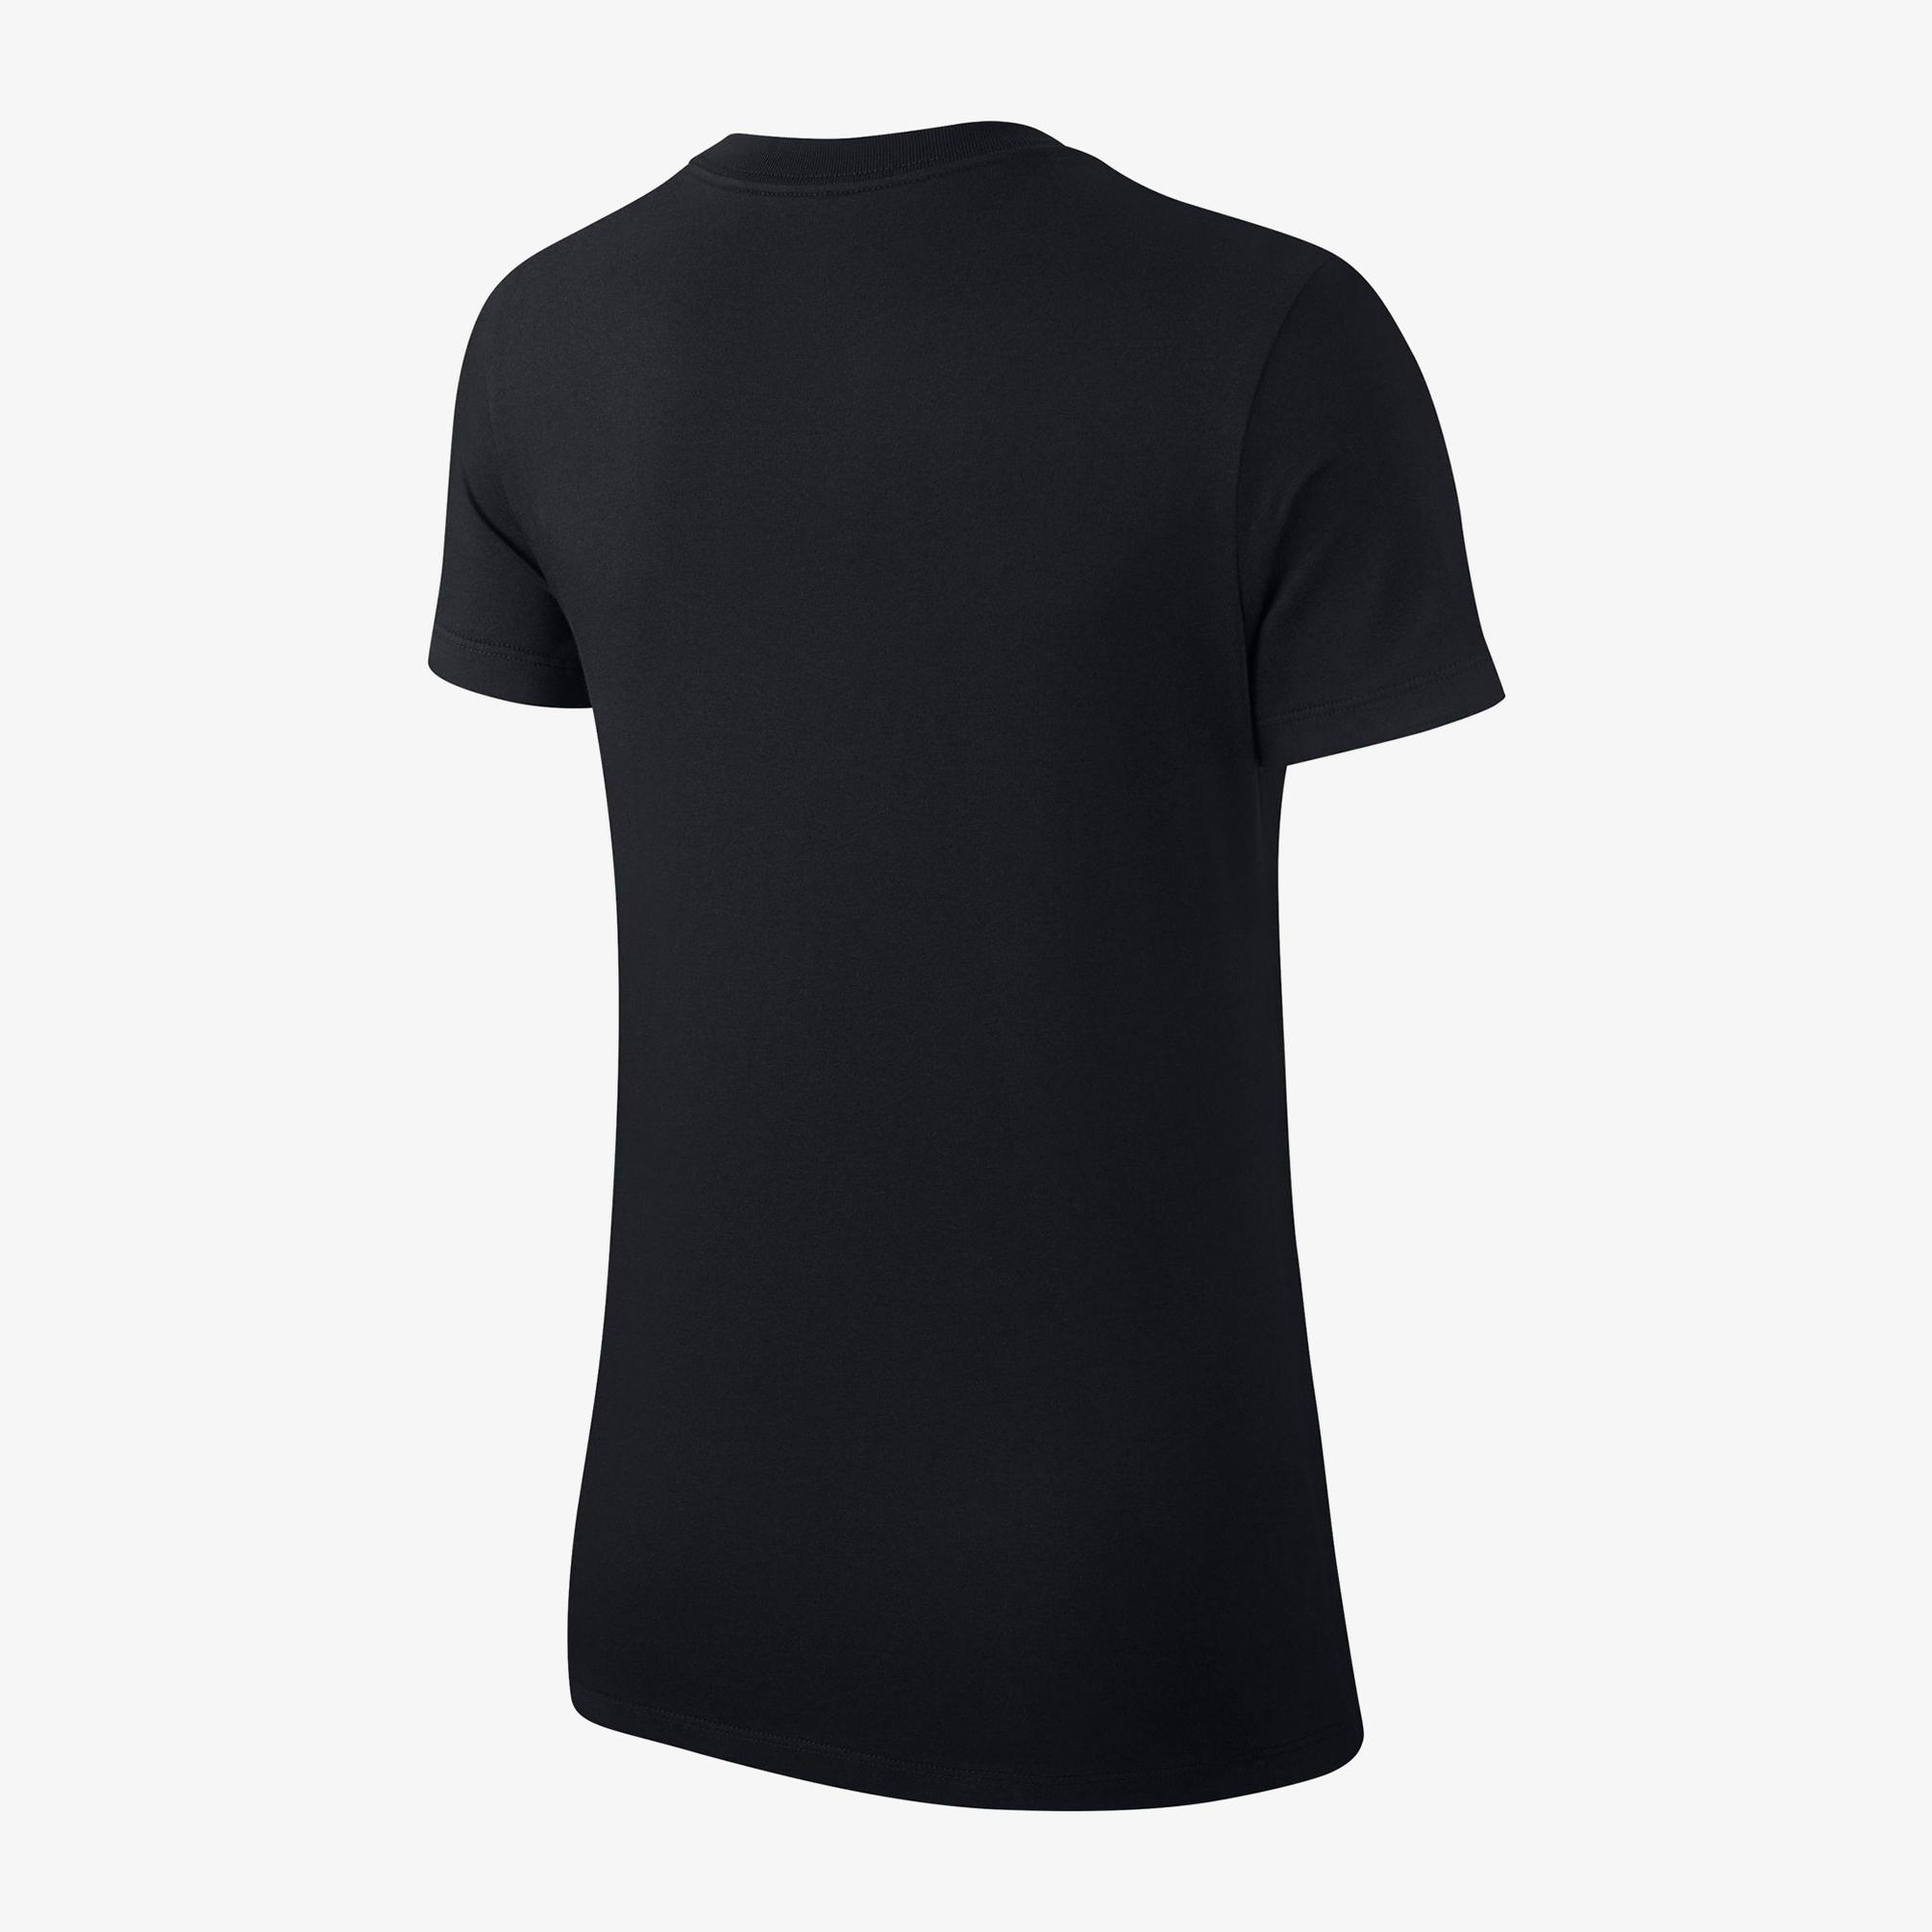  Nike Sportswear Essential Kadın Siyah T-Shirt